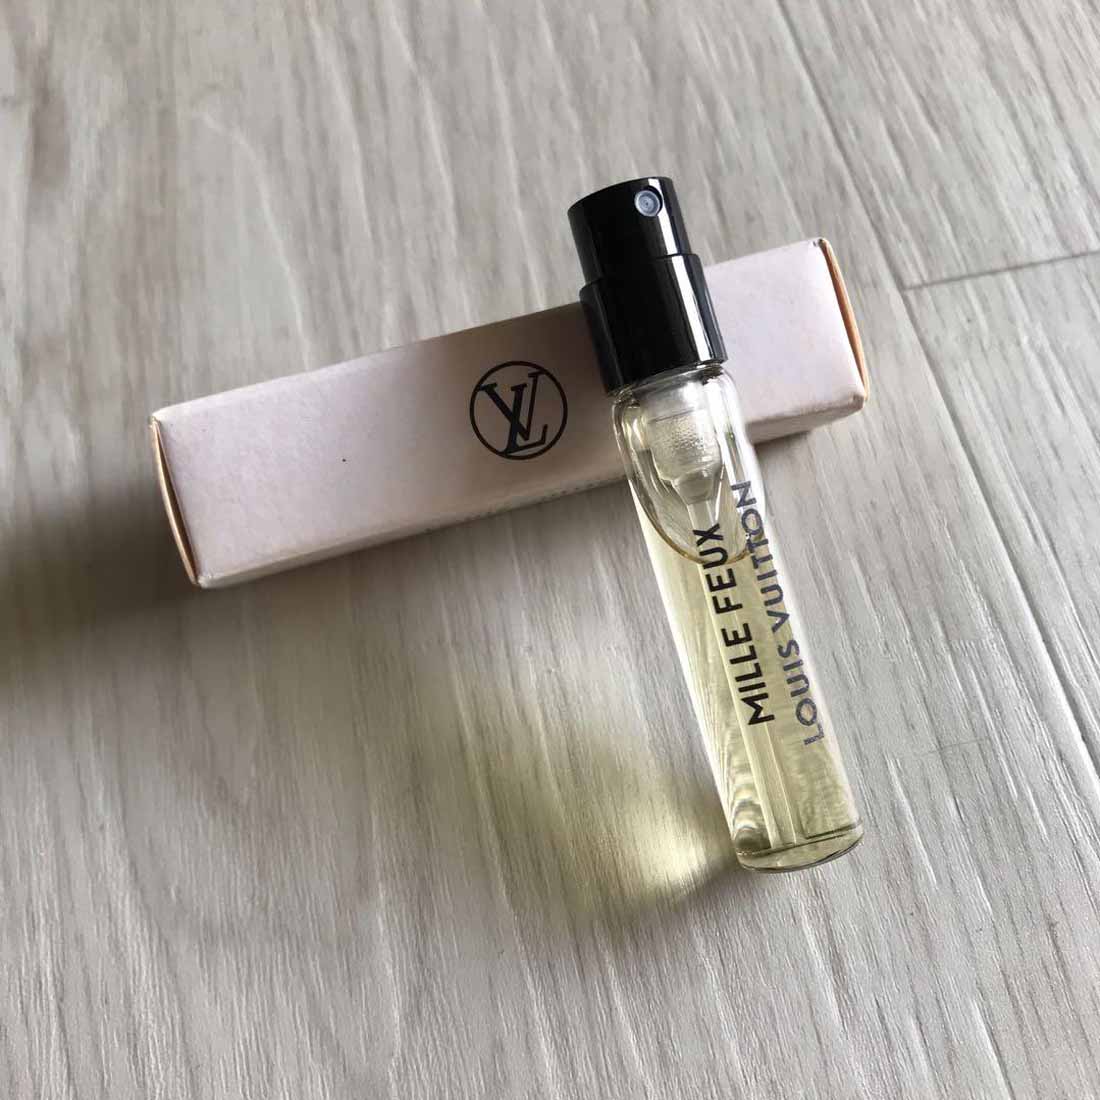 LOUIS VUITTON Mille Feux Perfume Review - LV Olfactive Fragrance Experience  